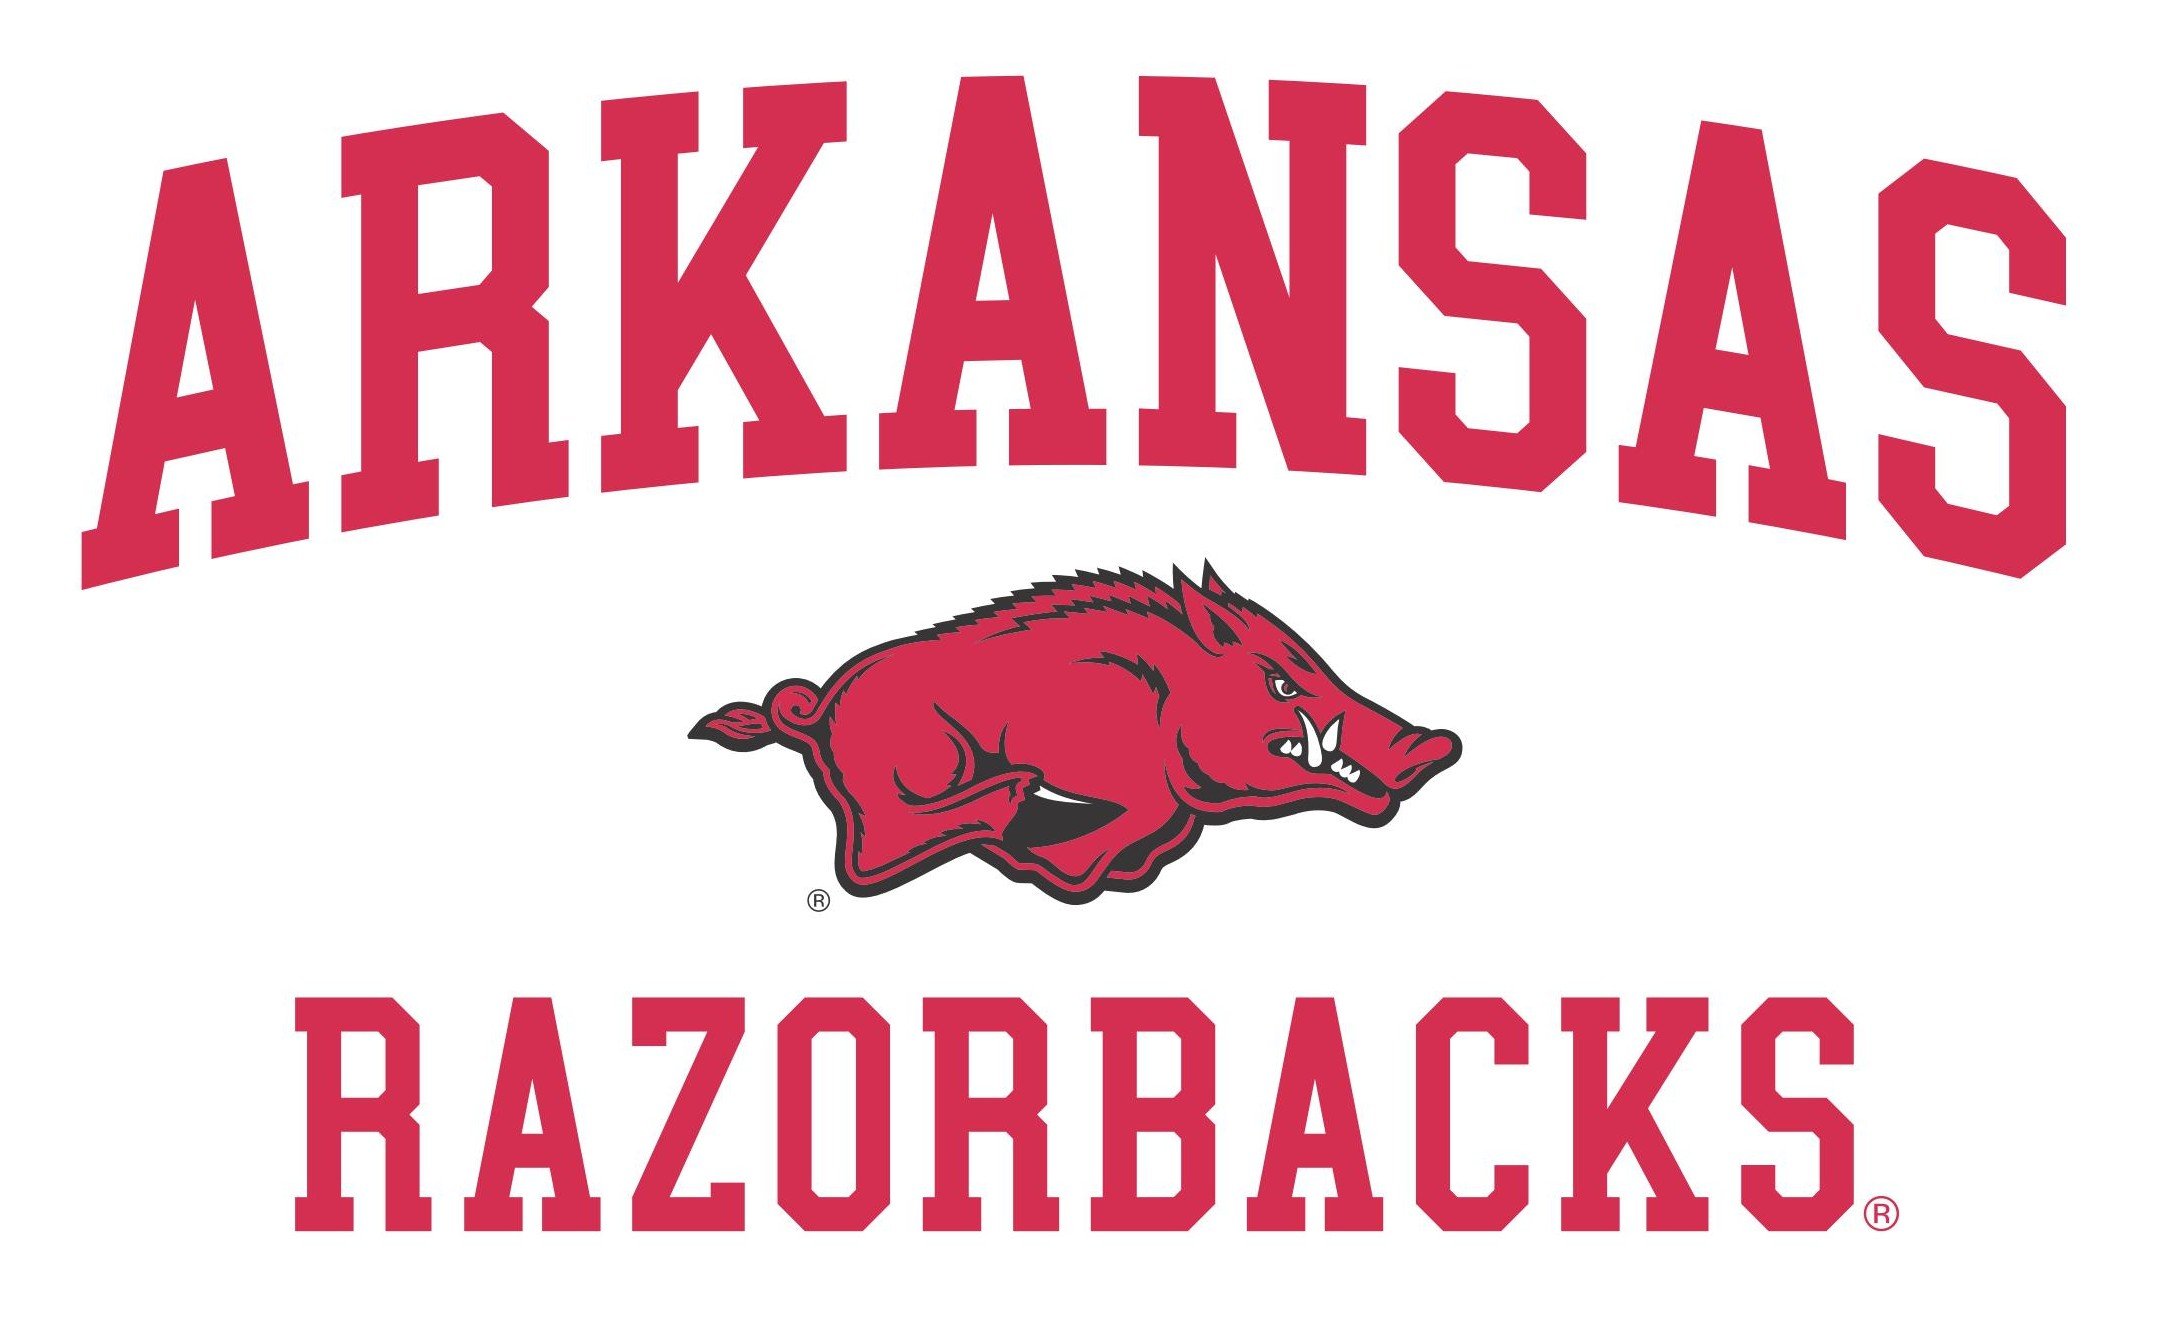 Arkansas Football Downloadable 2021 Razorbacks football schedule